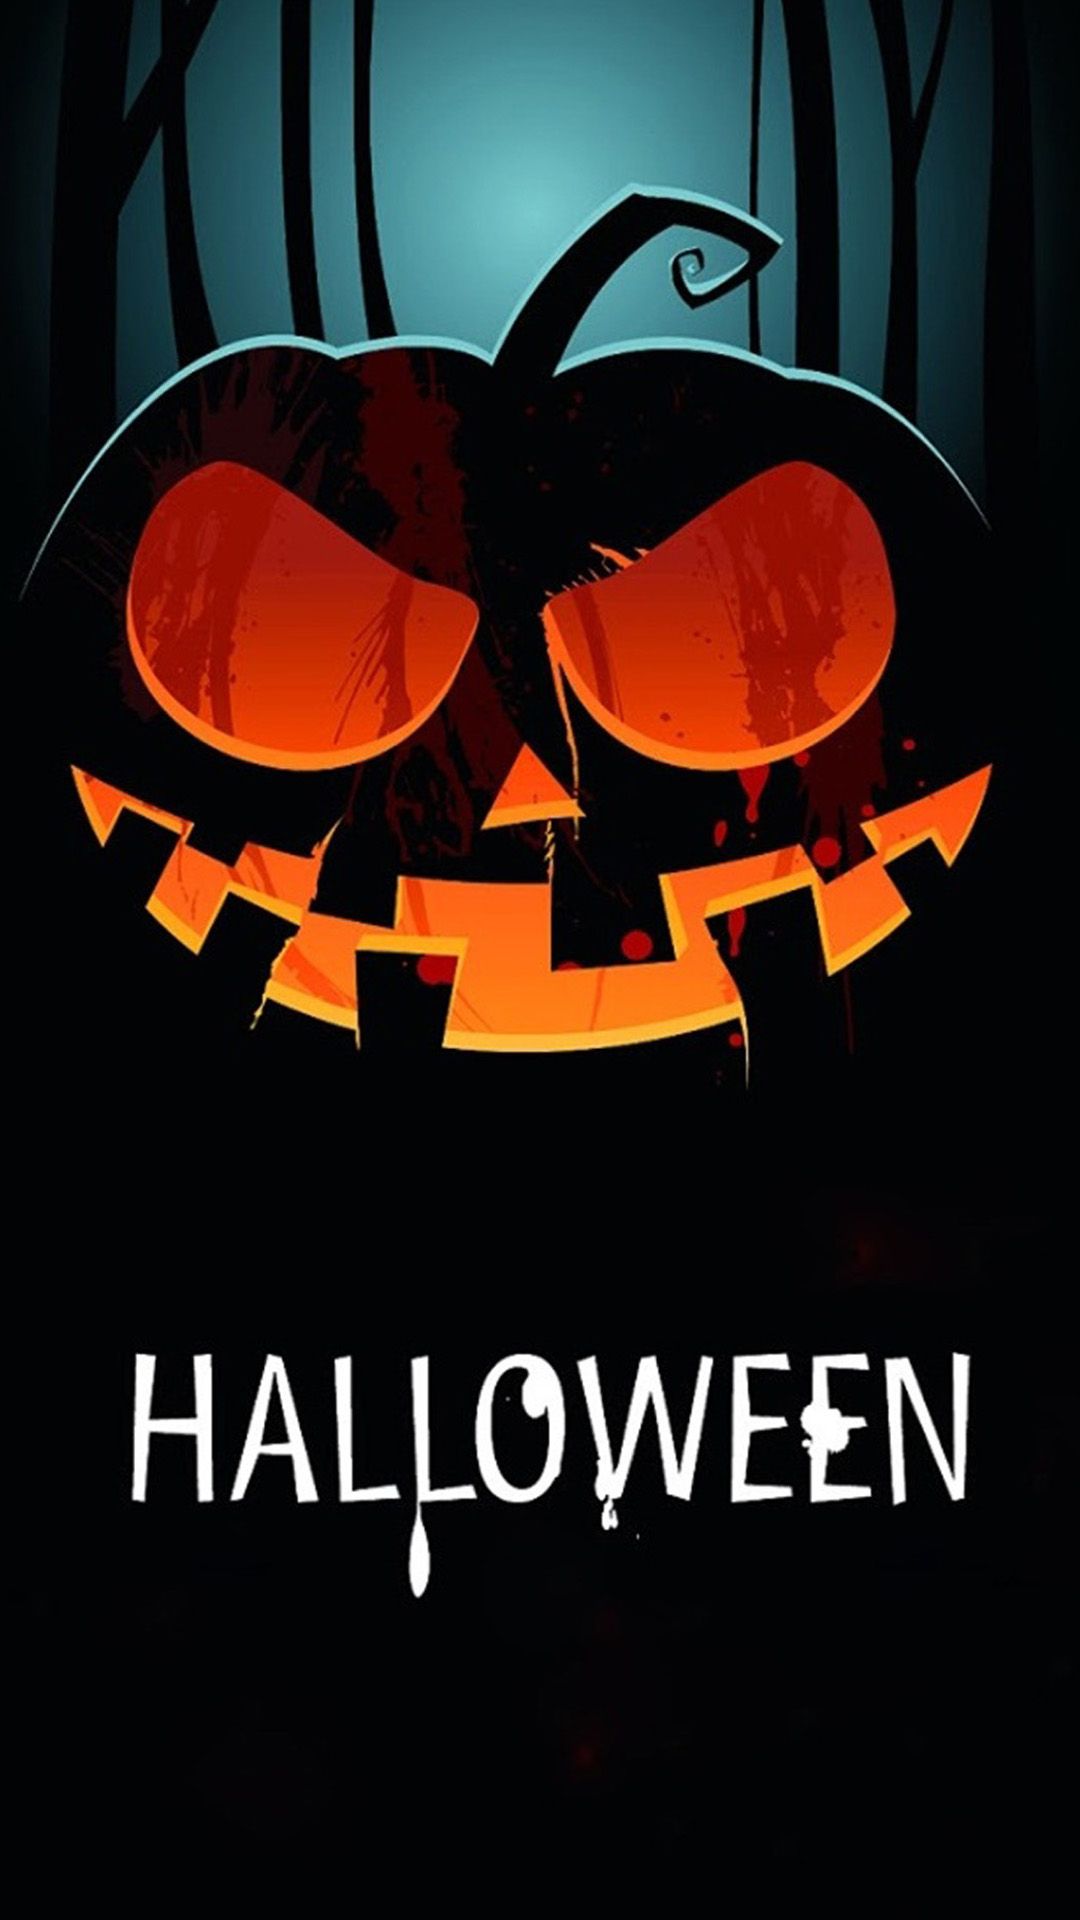 Halloween Pumpkin Illustration Android Wallpaper free download